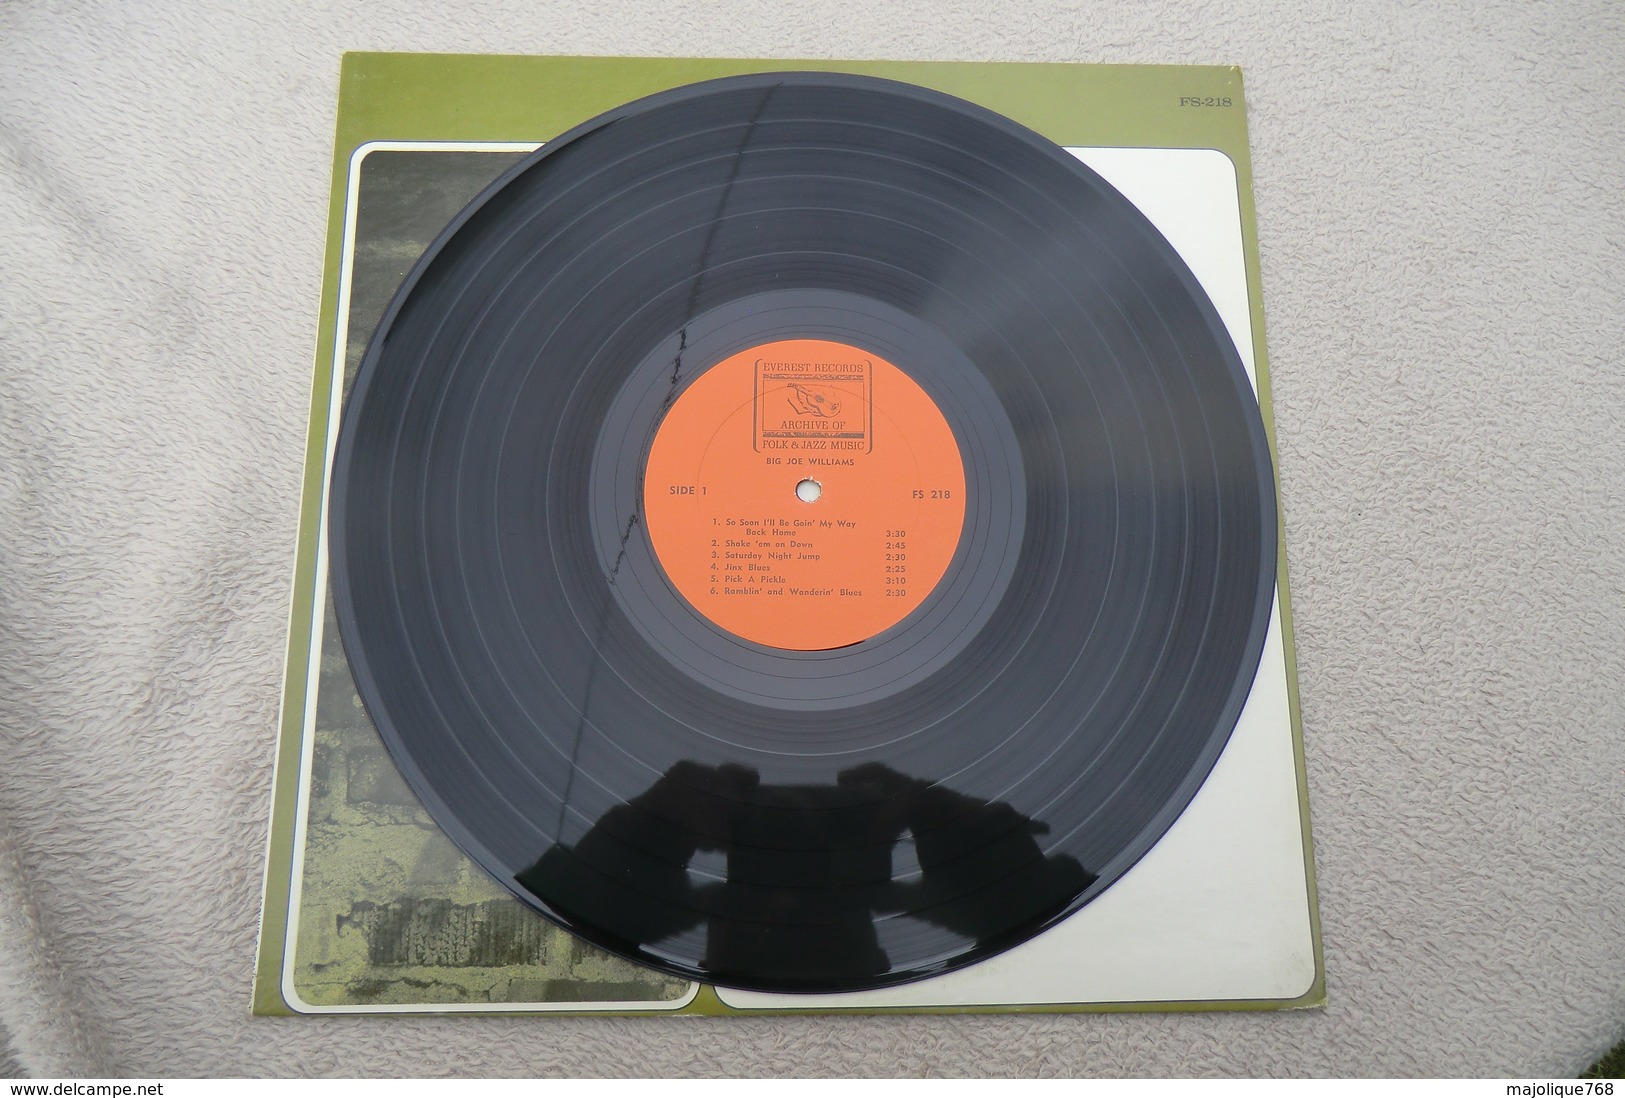 Big Joe Williams -  Everest Records Archive Of Folk & Jazz Music FS-218 - 1968 U S - Blues